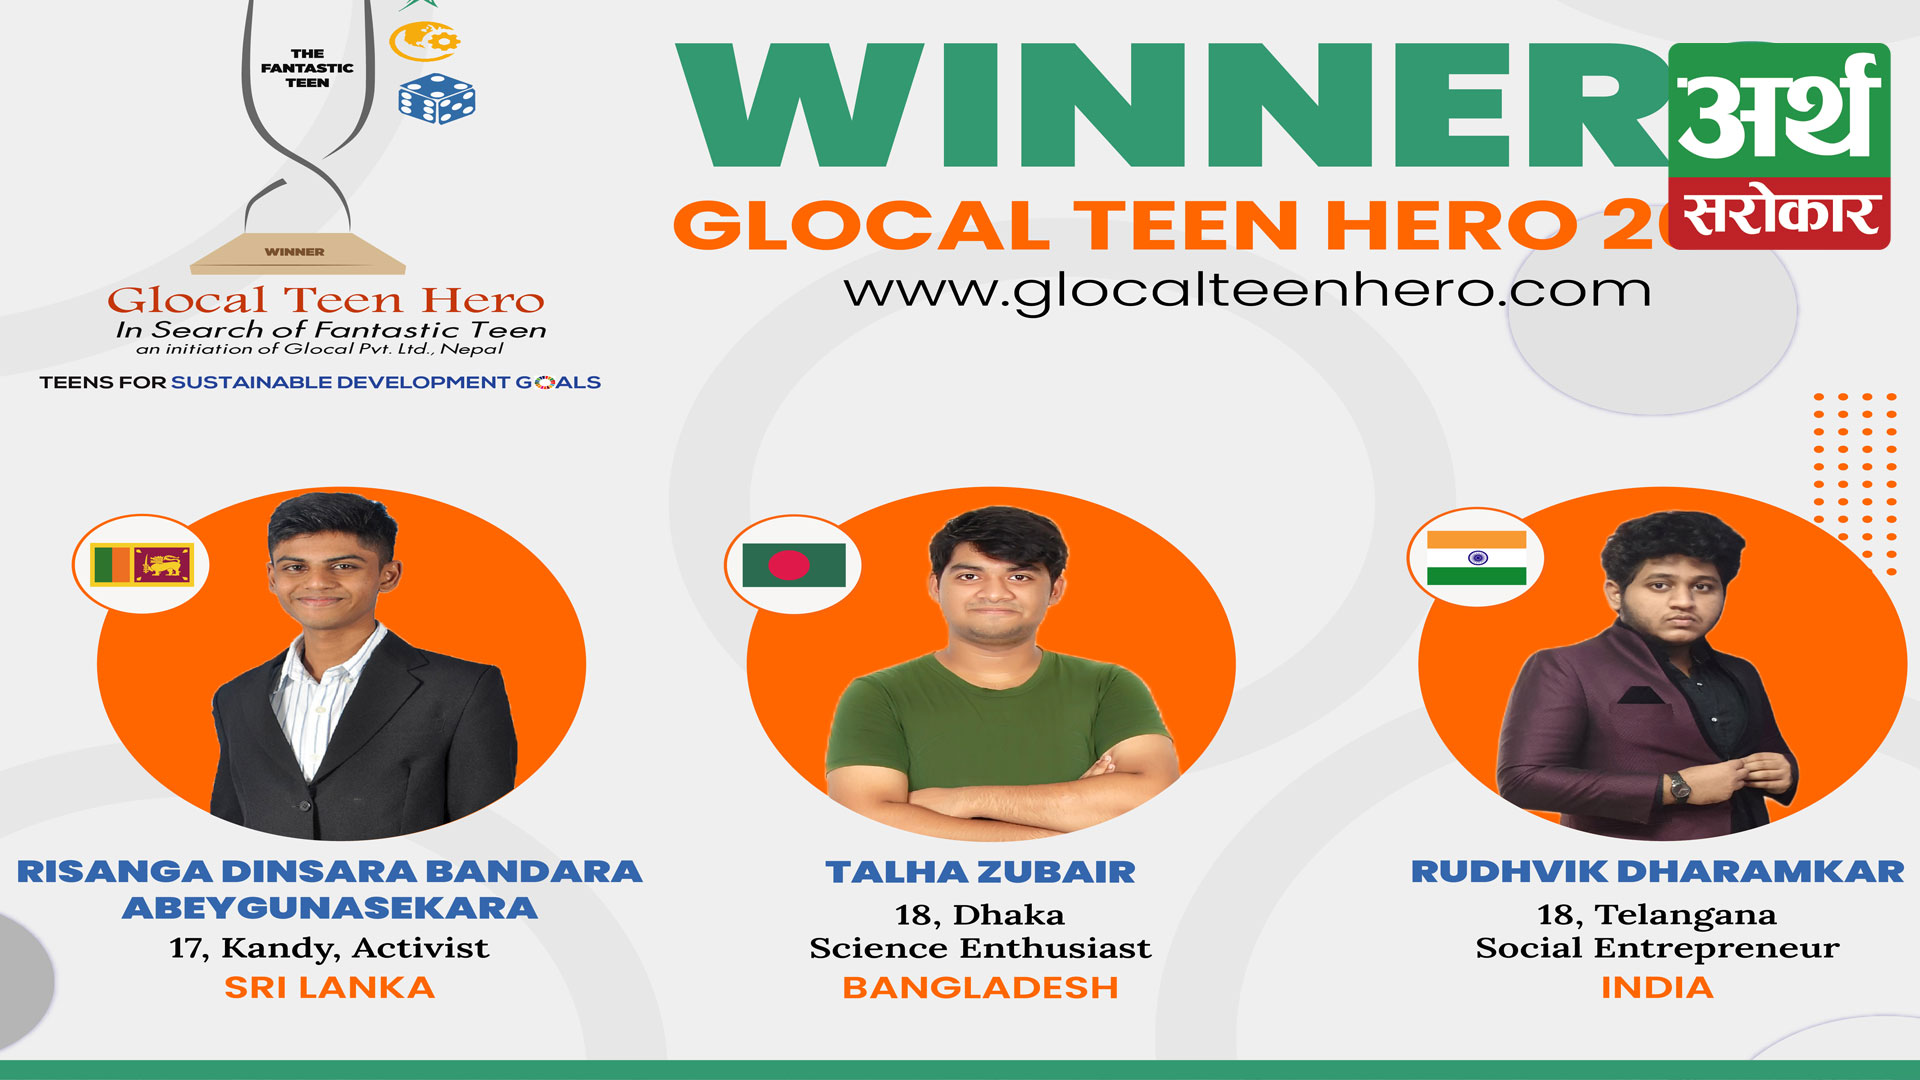 Glocal has announced the winner of Glocal Teen Hero India, Sri Lanka & Bangladesh 2022